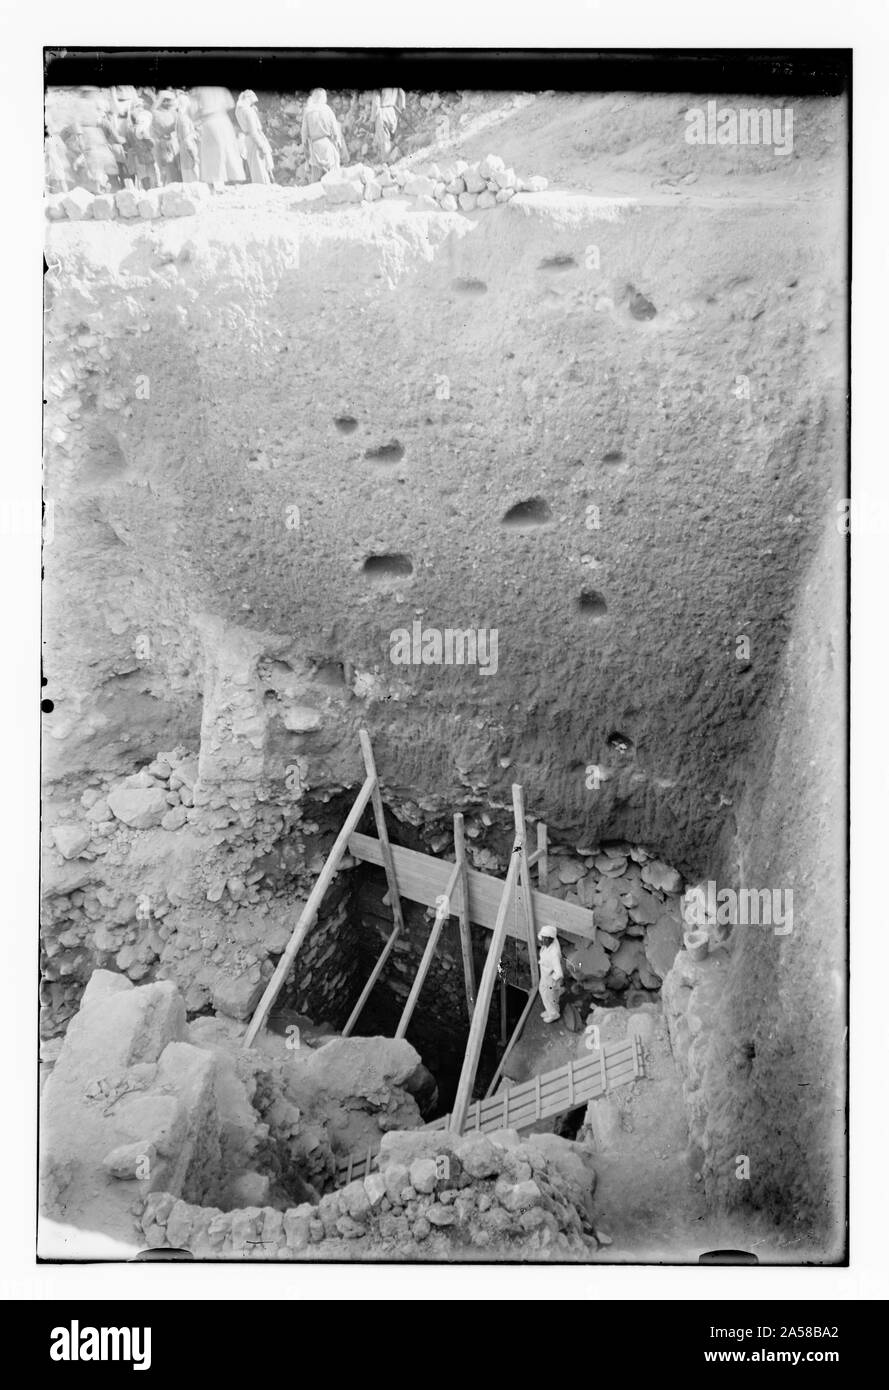 Tyropoeon Valley excavation pit Stock Photo - Alamy